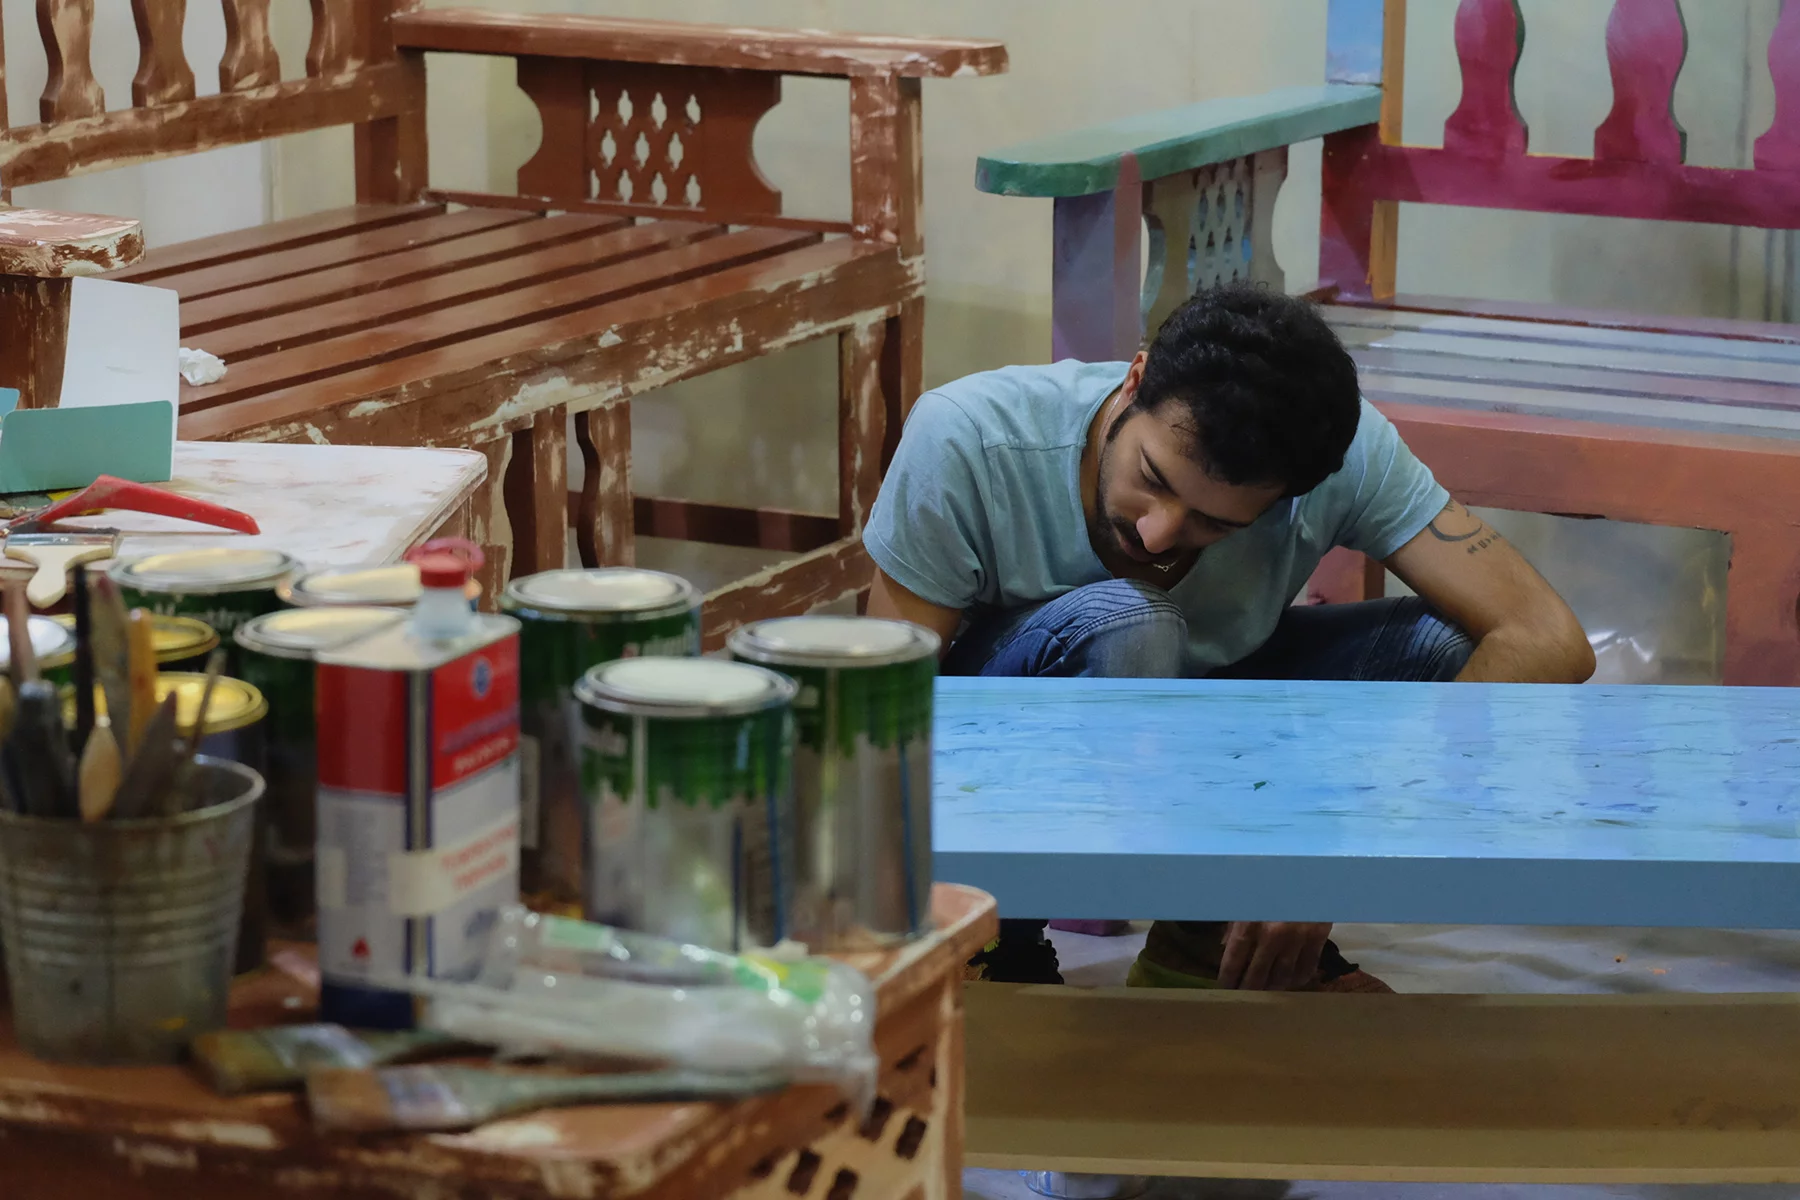 An artist restoring furniture in Doha, Qatar